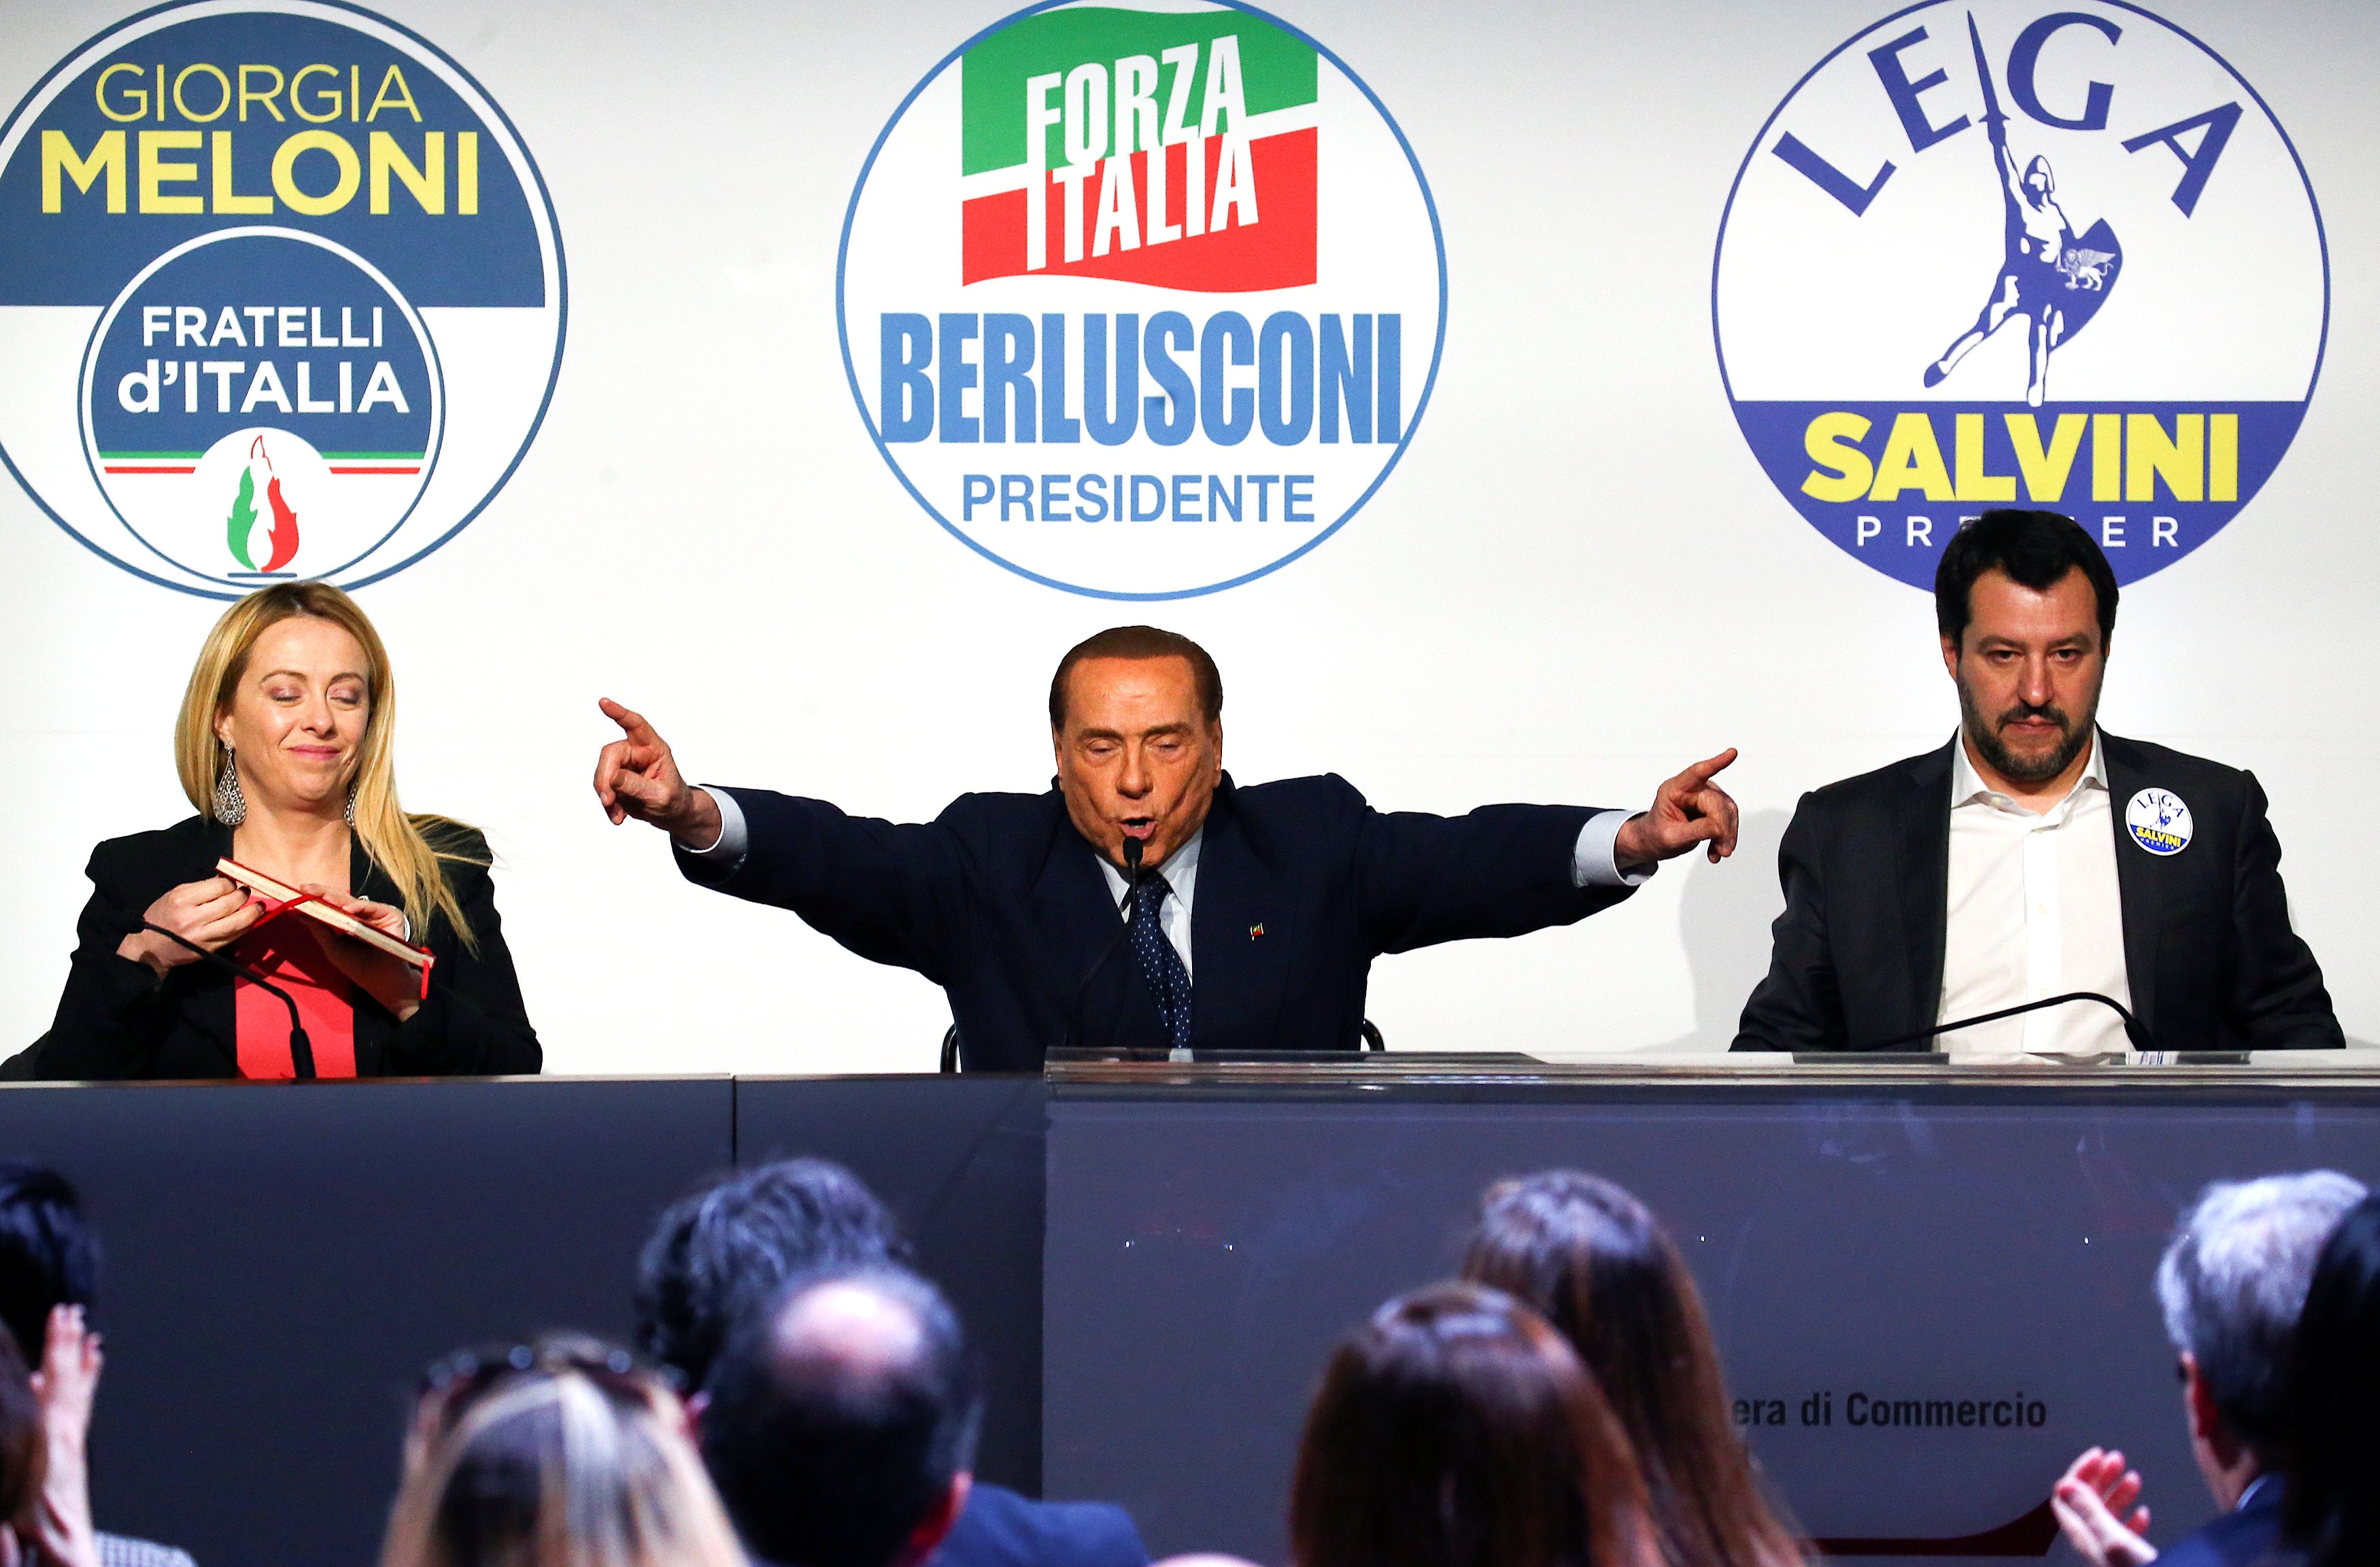 Forza Italia leader Silvio Berlusconi speaks flanked by Fratelli D’Italia party leader Giorgia Meloni and La Lega (Northern League) leader Matteo Salvini during a meeting in Rome on March 1, 2018. Photo: Reuters